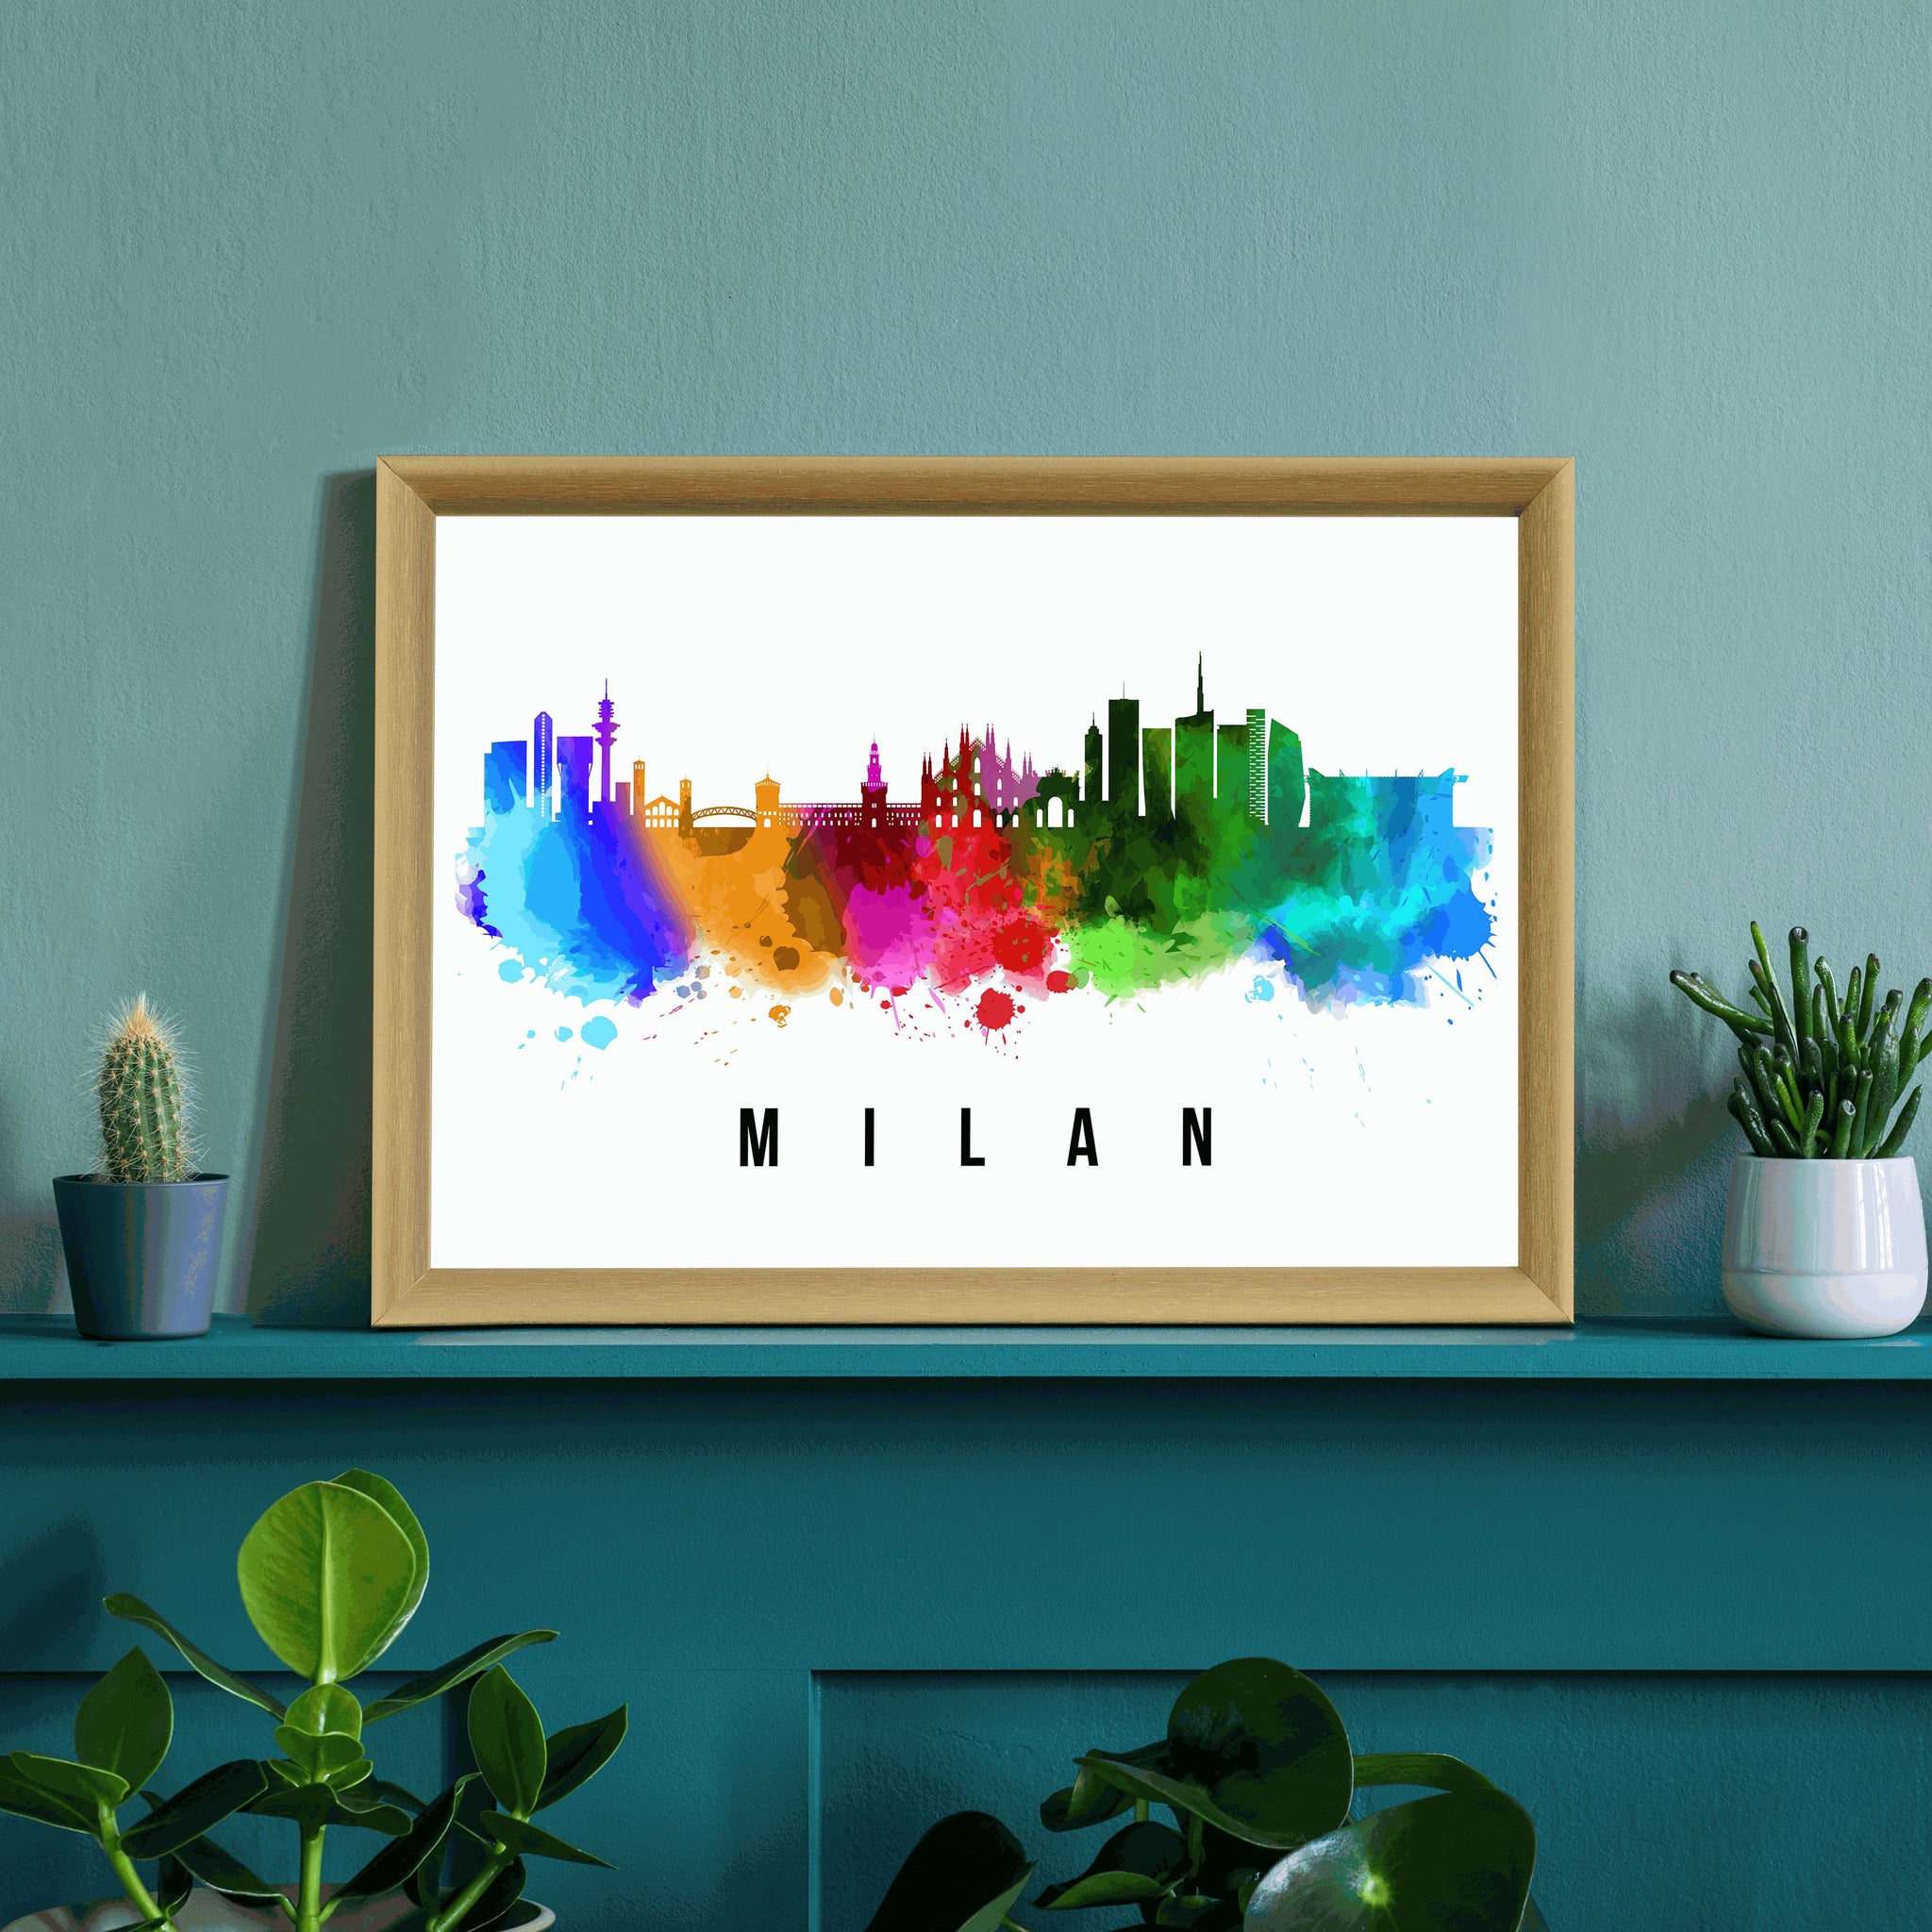 MILAN - ITALY Poster, Skyline Poster Cityscape and Landmark Milan City Illustration Home Wall Art, Office Decor